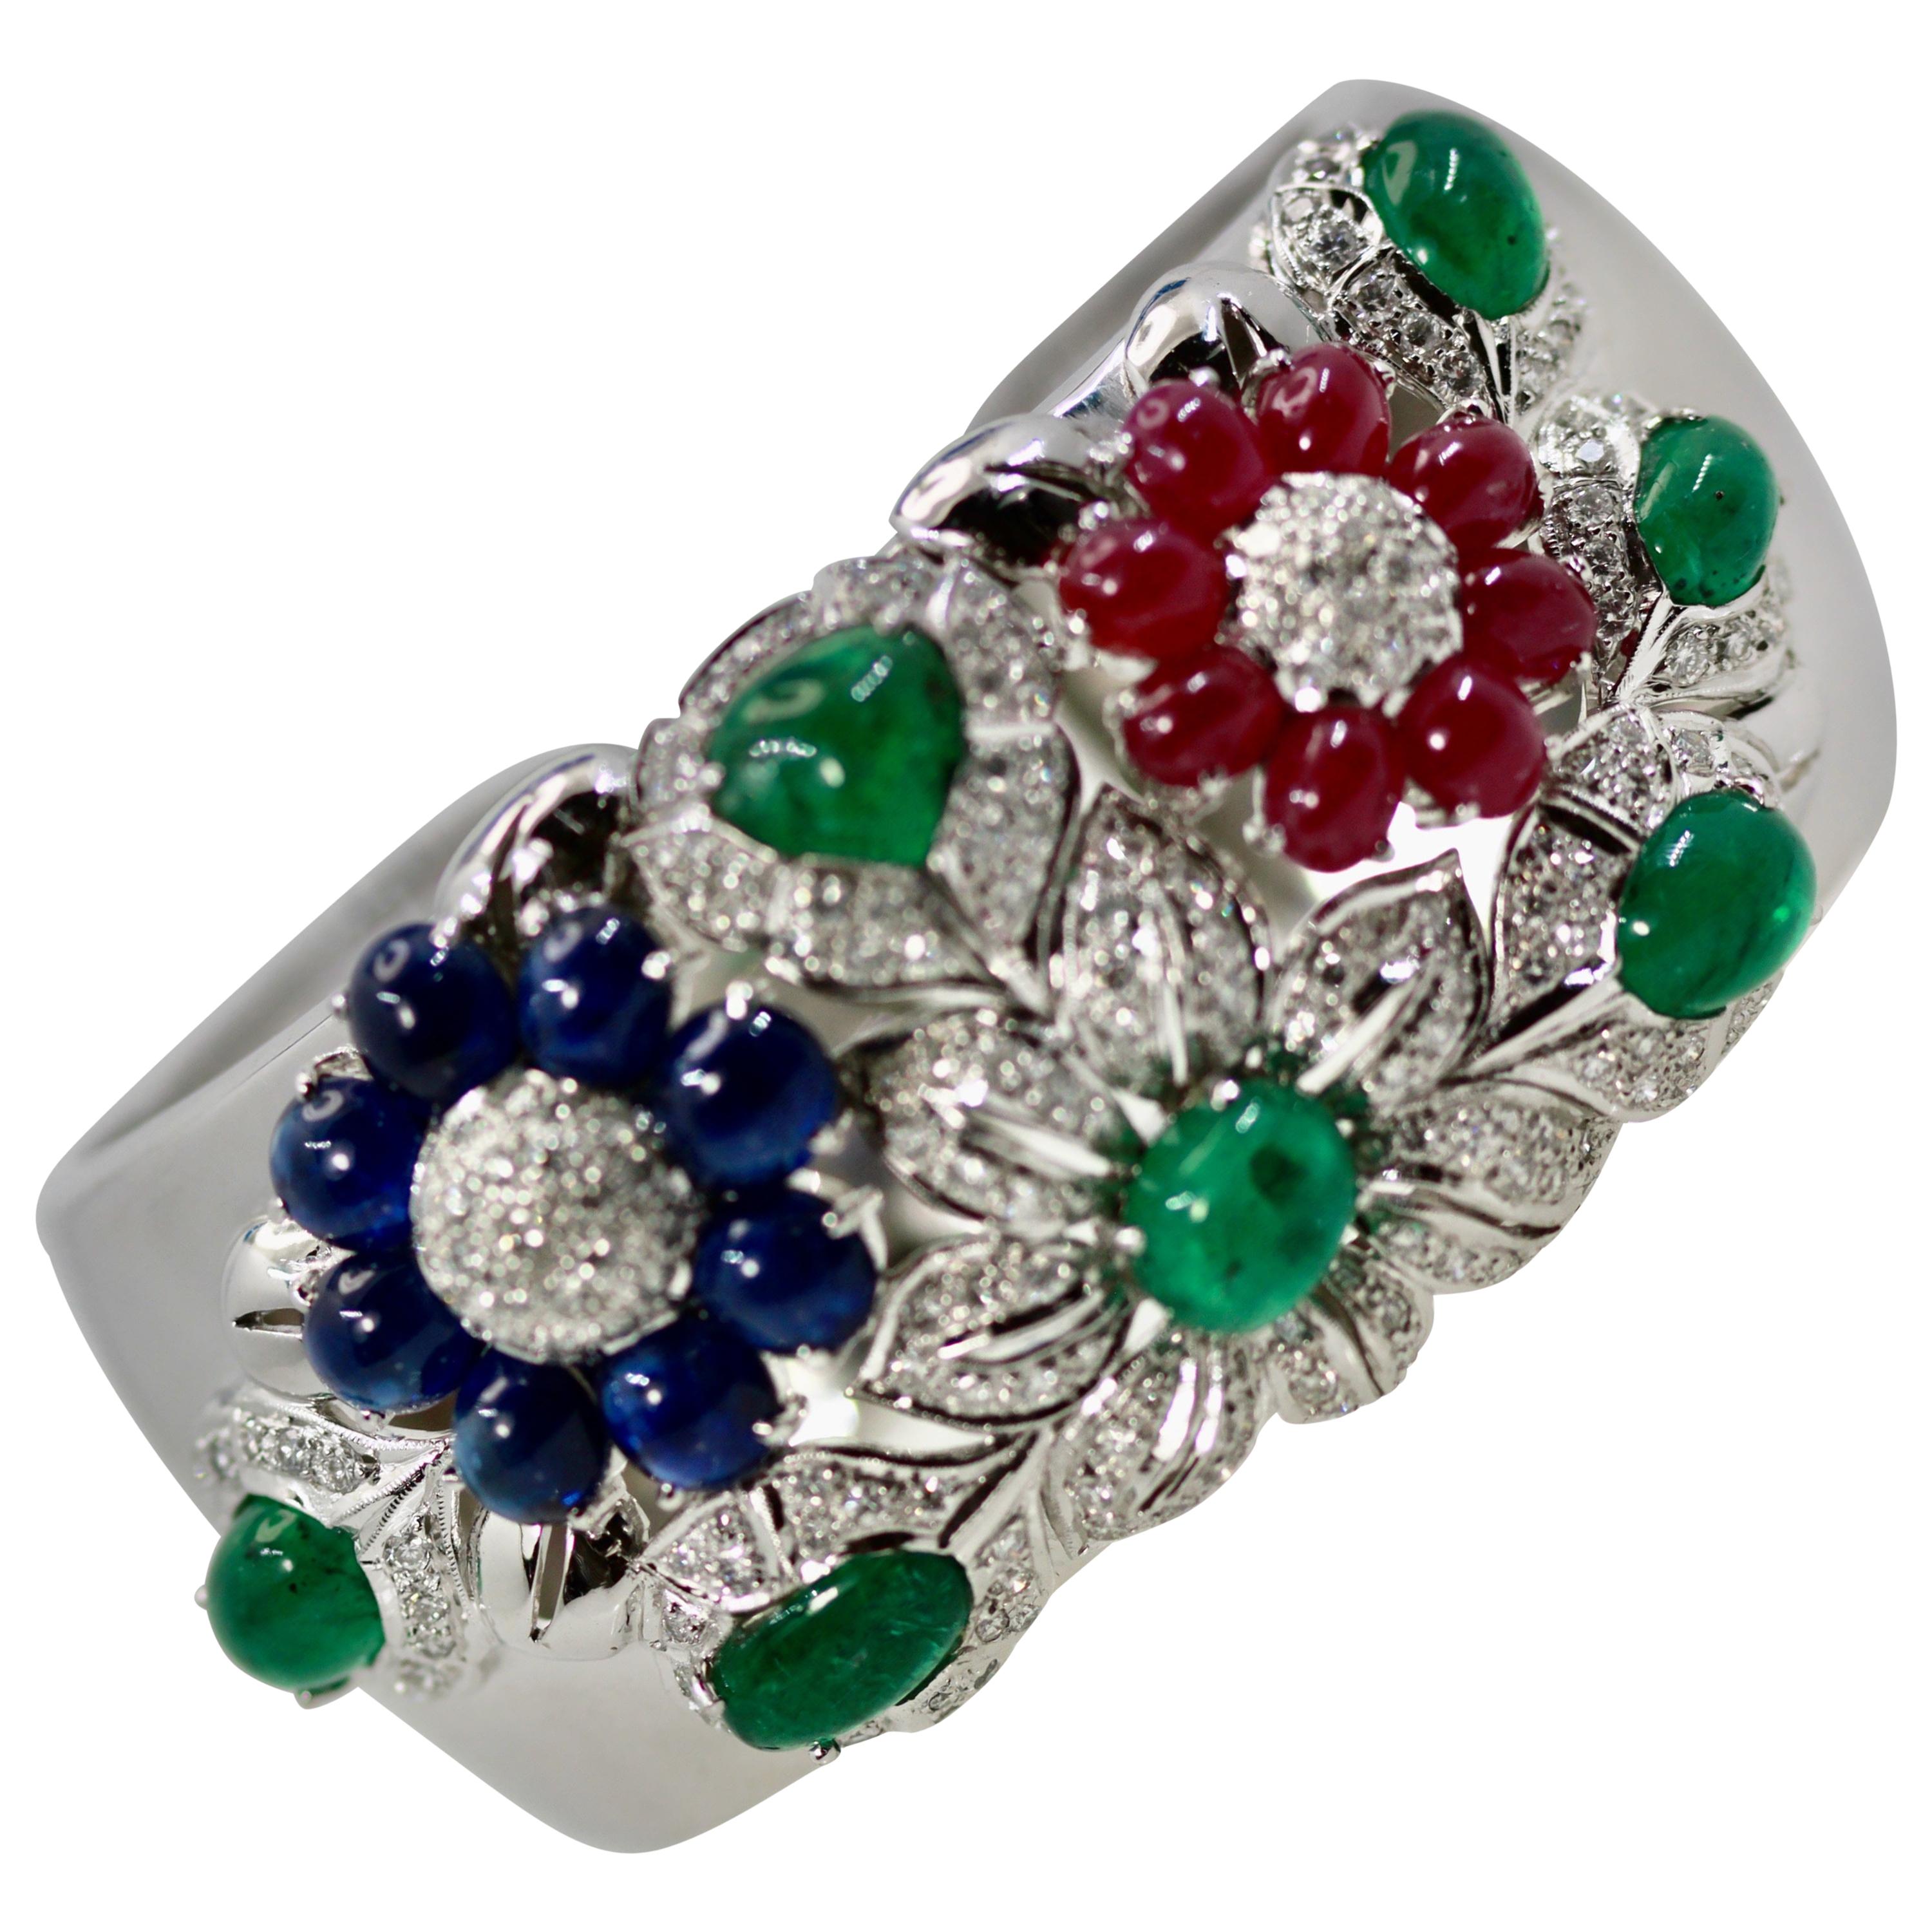 Large Wide Cuff Bracelet 17 Carat Rubies, Emeralds, Sapphires, Diamonds 18 Karat